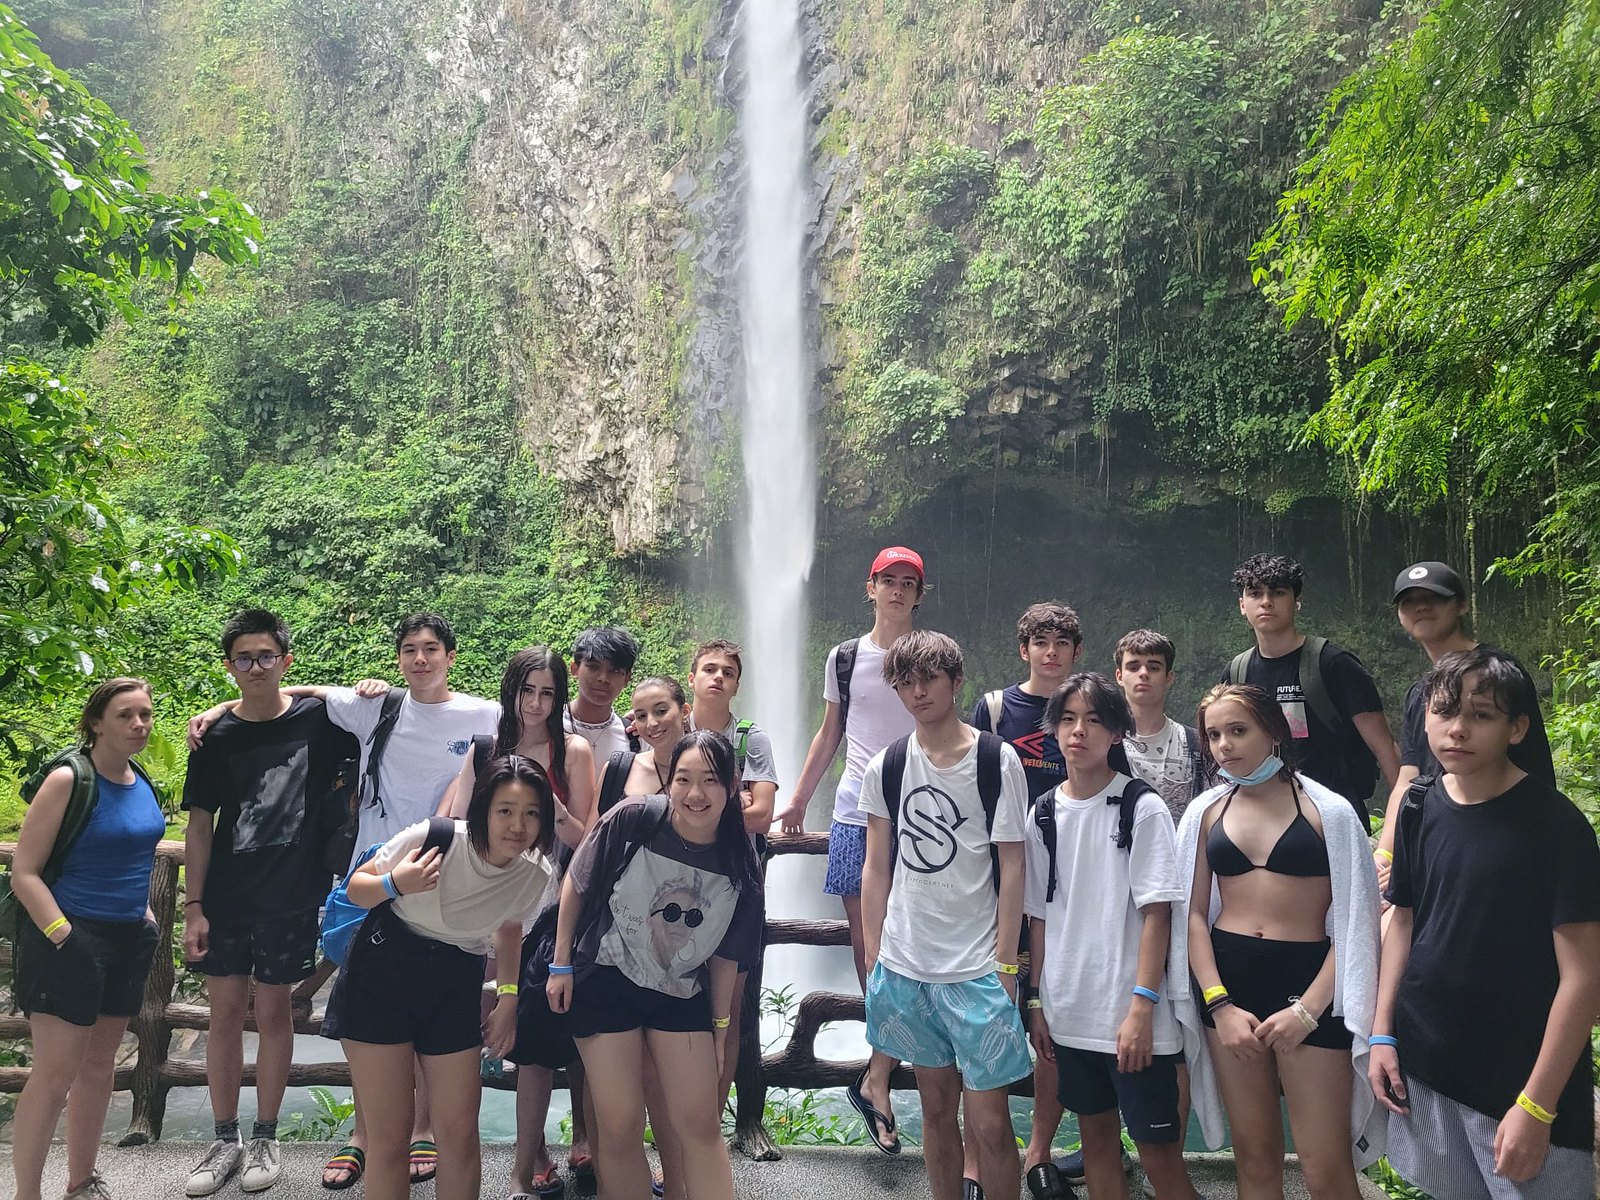 Costa Rica waterfall